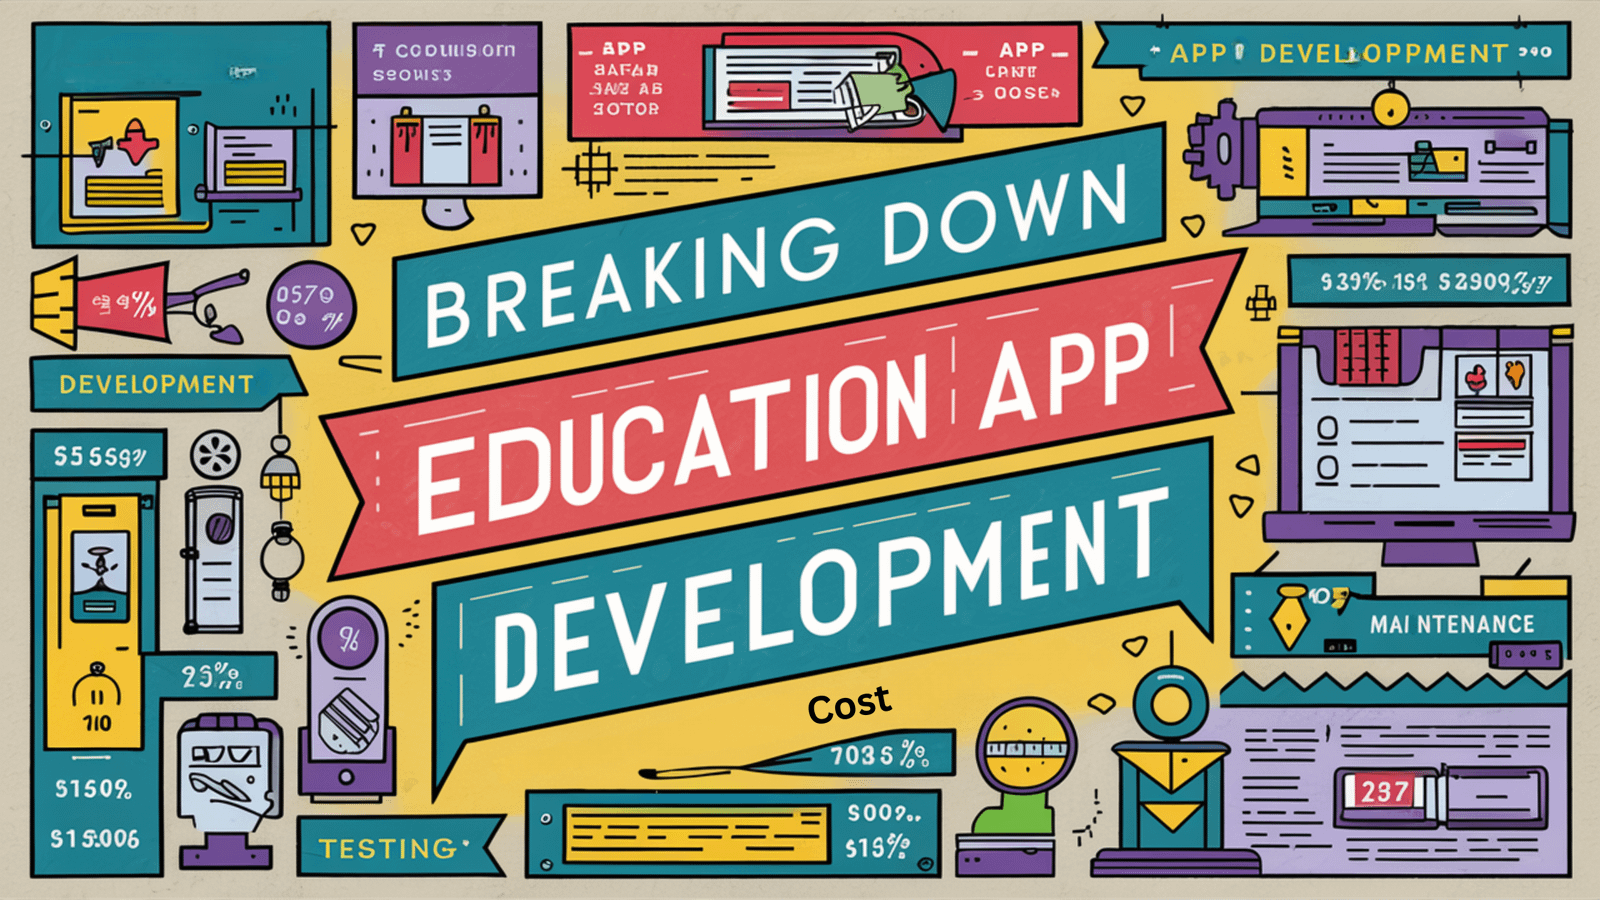 Education app development